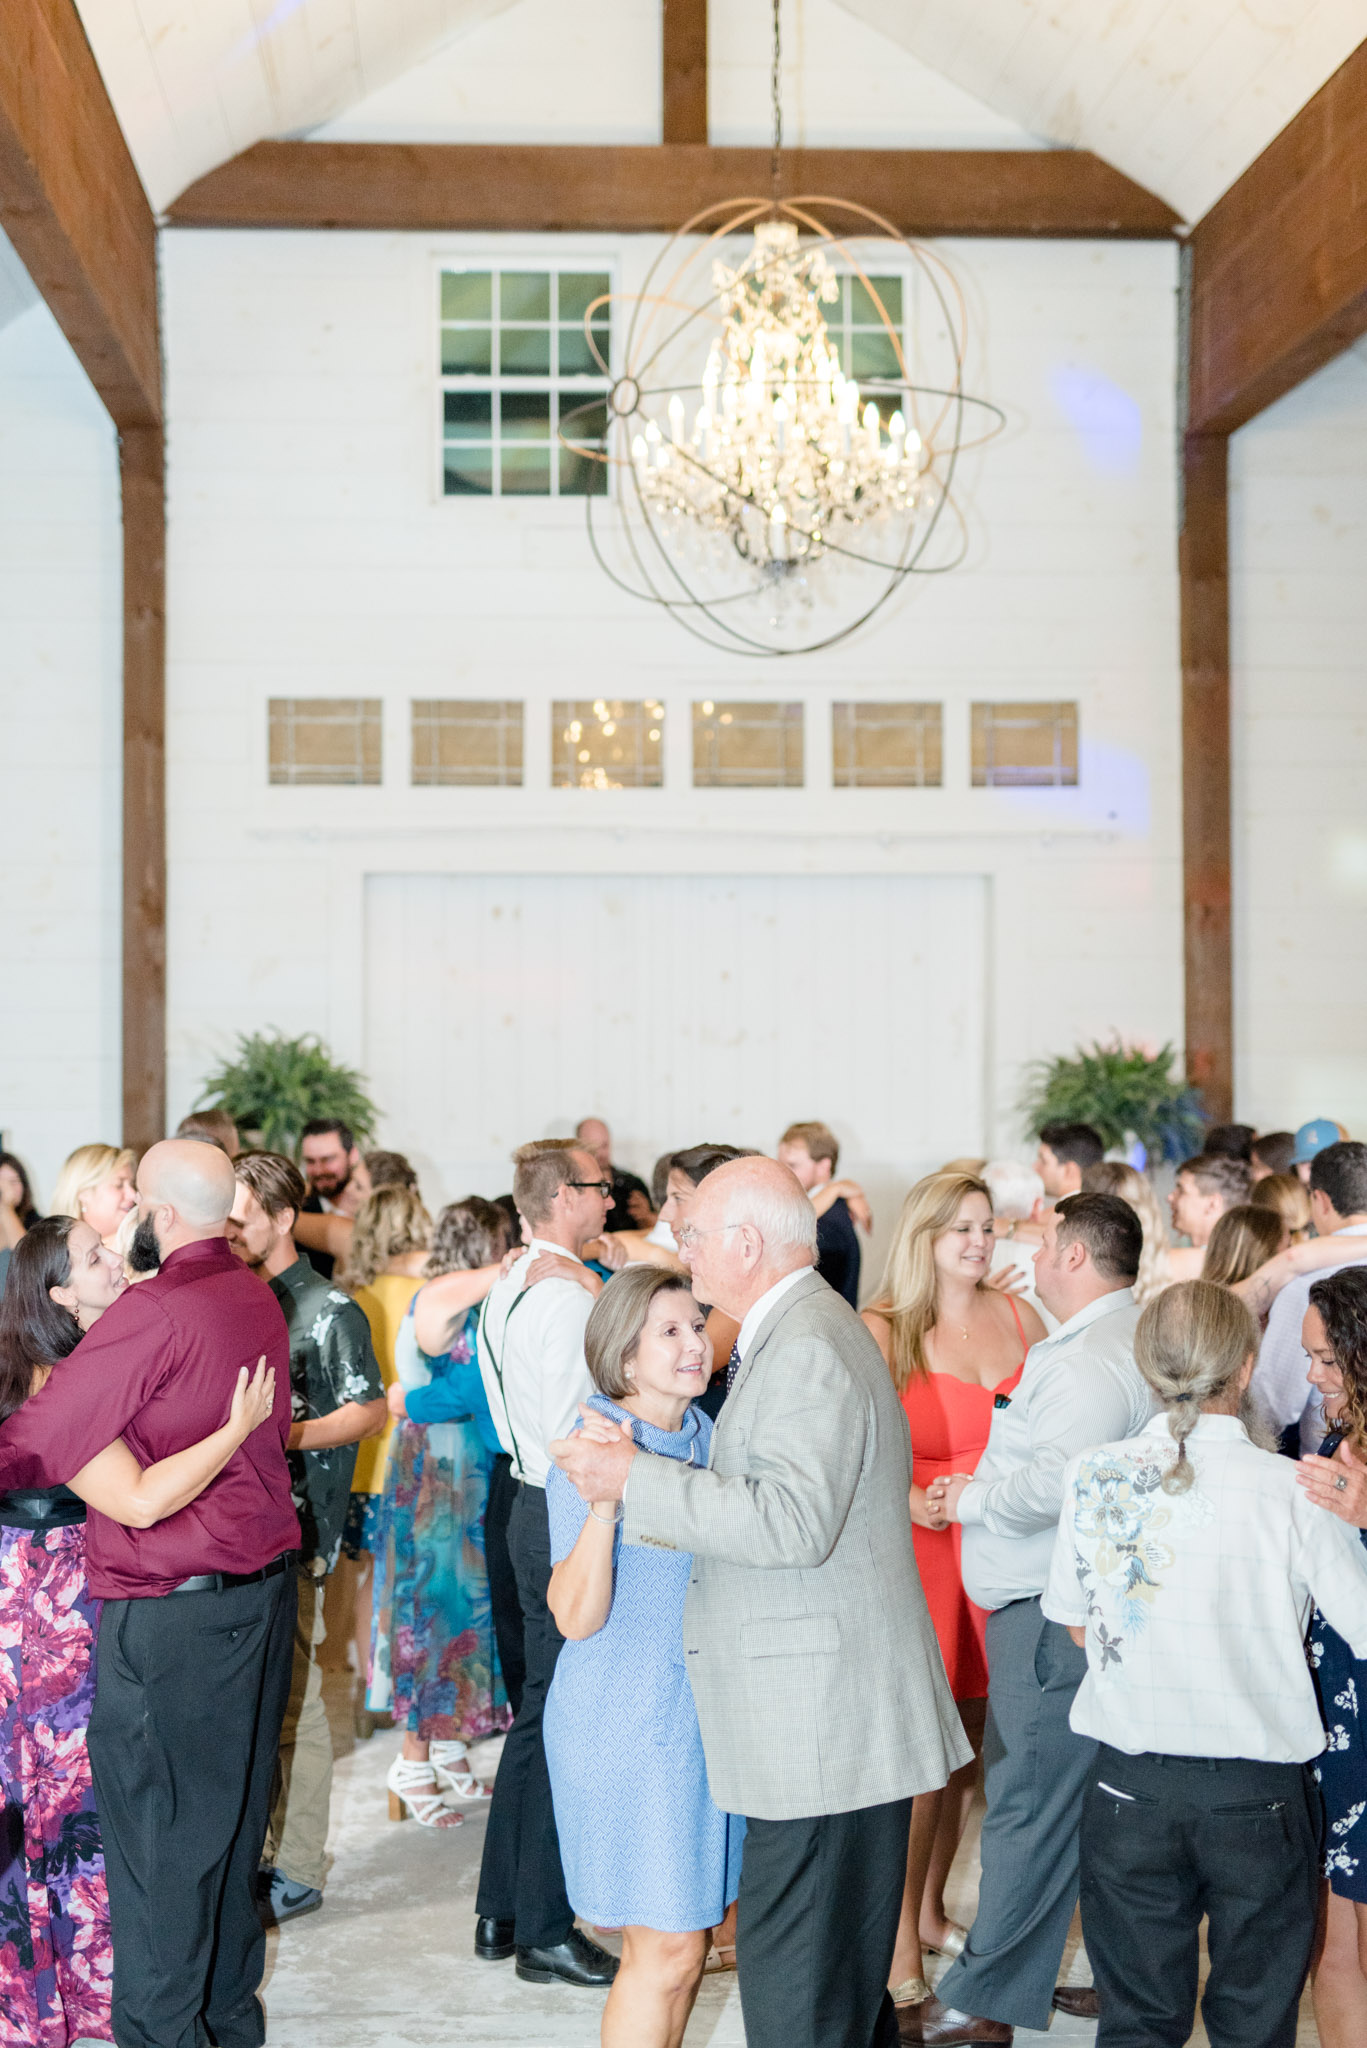 Wedding guests dance under chandelier.